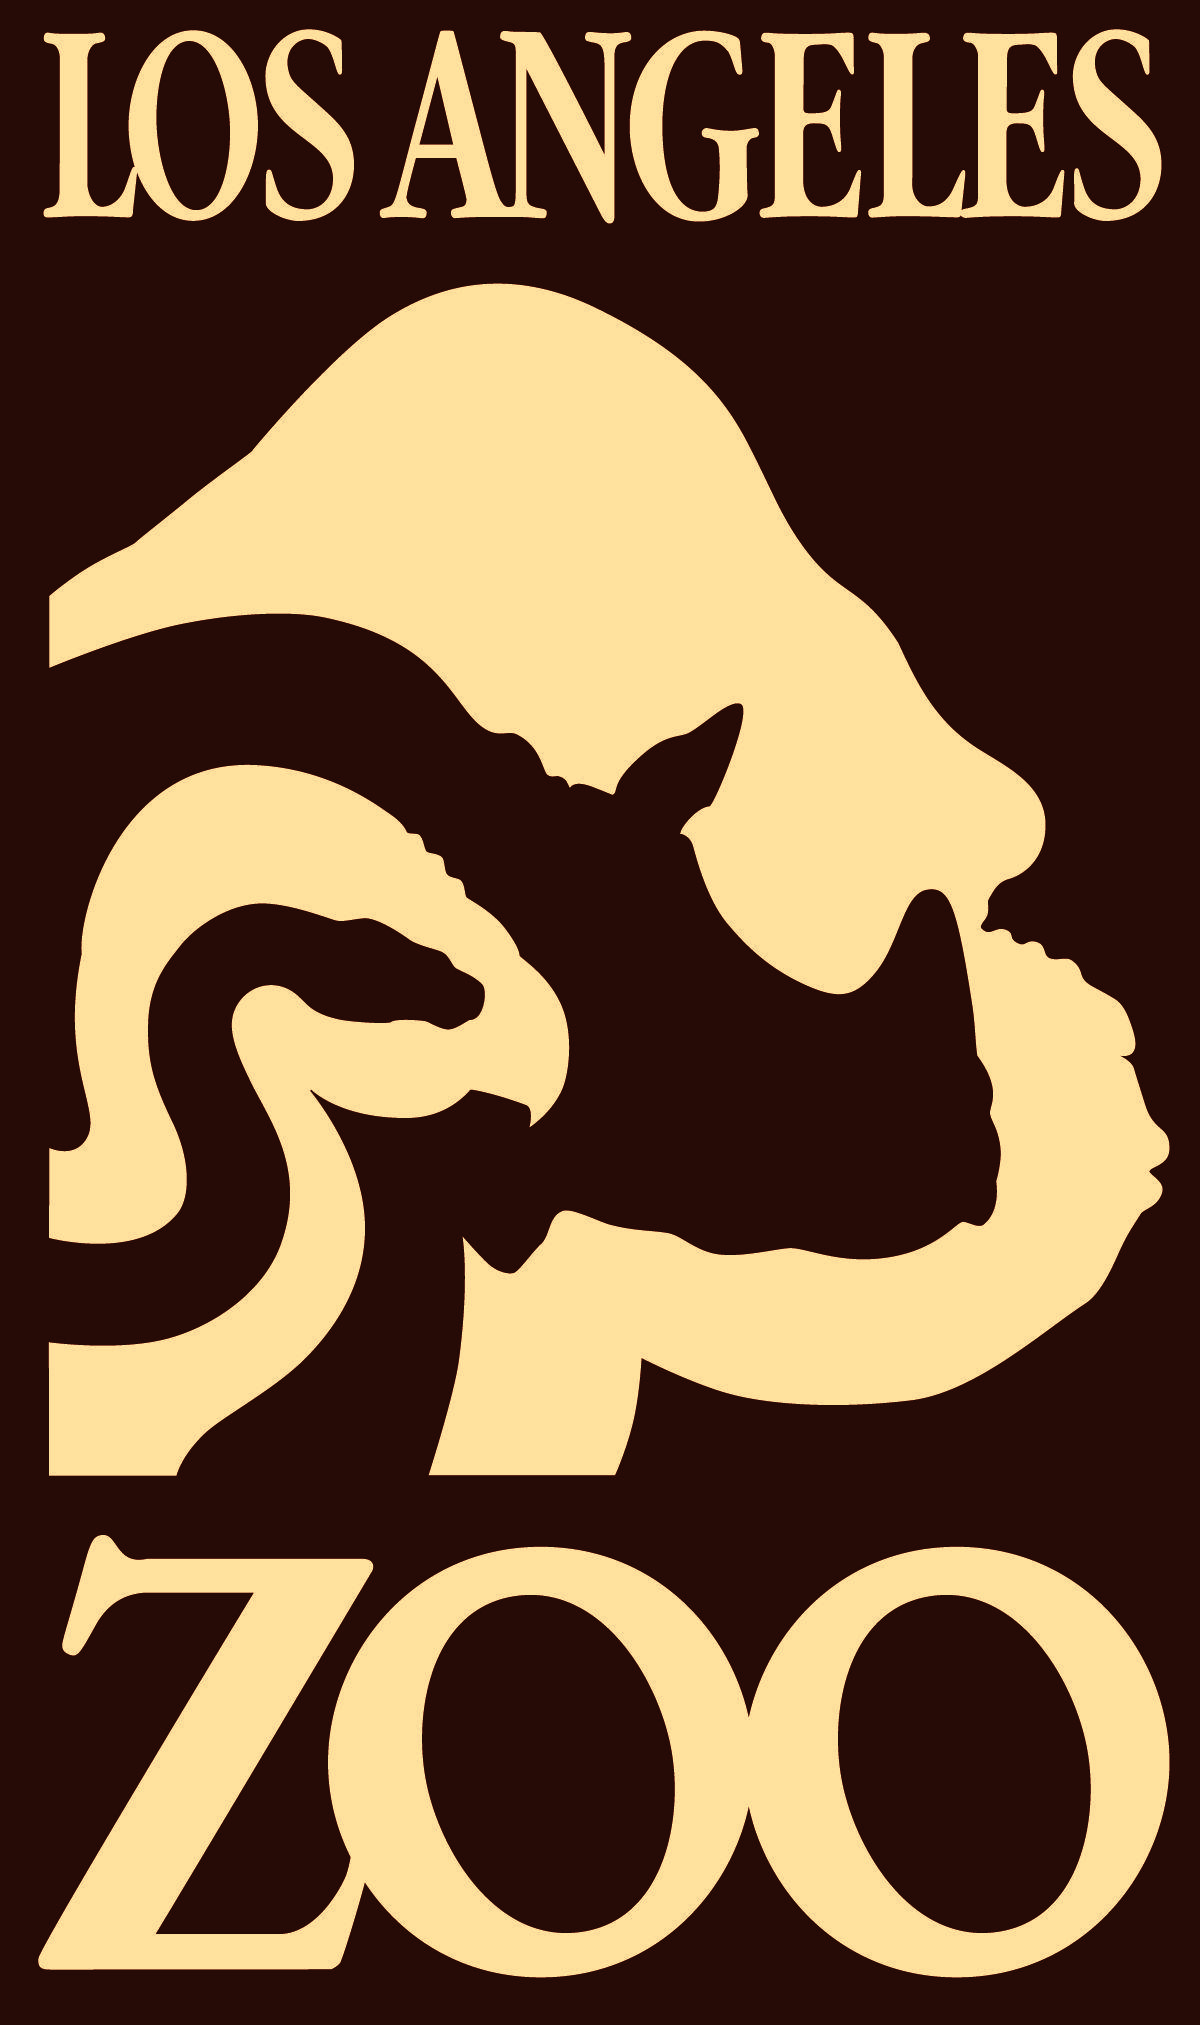 LA Zoo Logo - Los Angeles Zoo and Botanical Gardens Los Angeles Zoo and Botanical ...